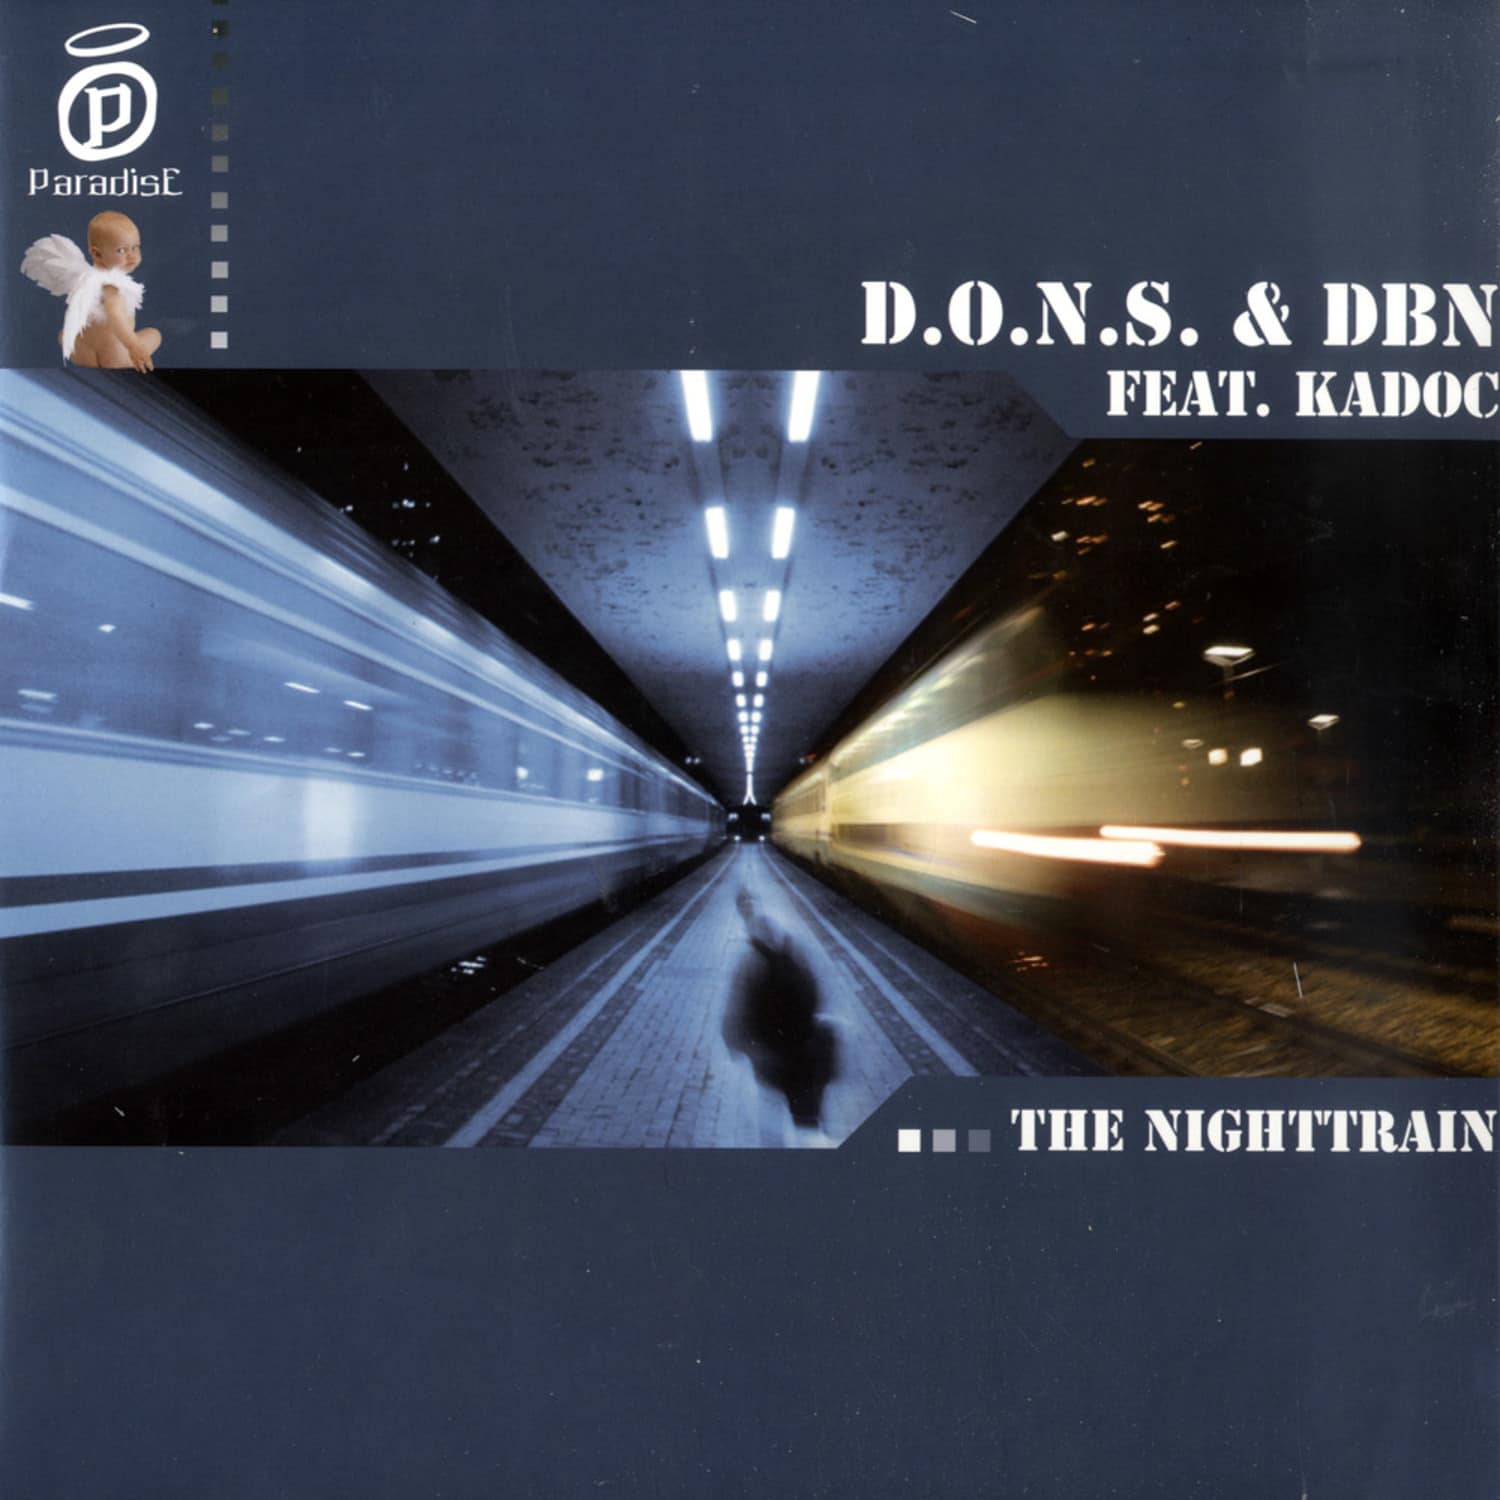 D.O.N.S. & DBN feat. Kadoc - THE NIGHTTRAIN